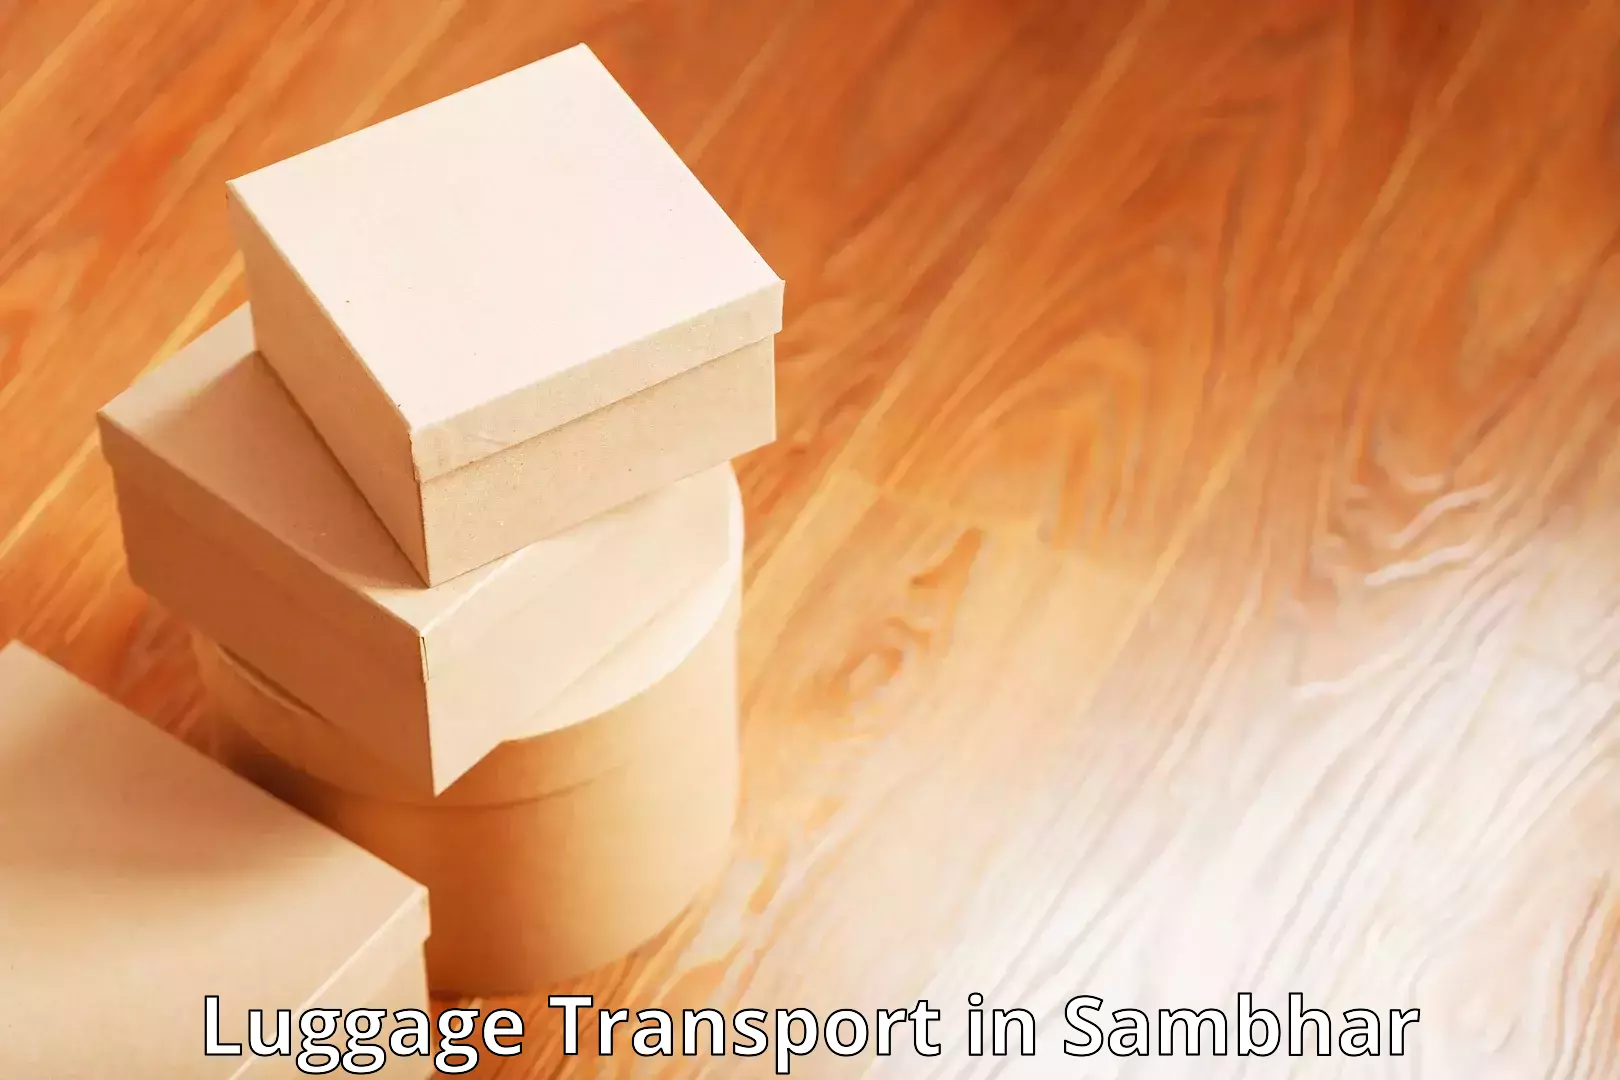 Hassle-free luggage shipping in Sambhar